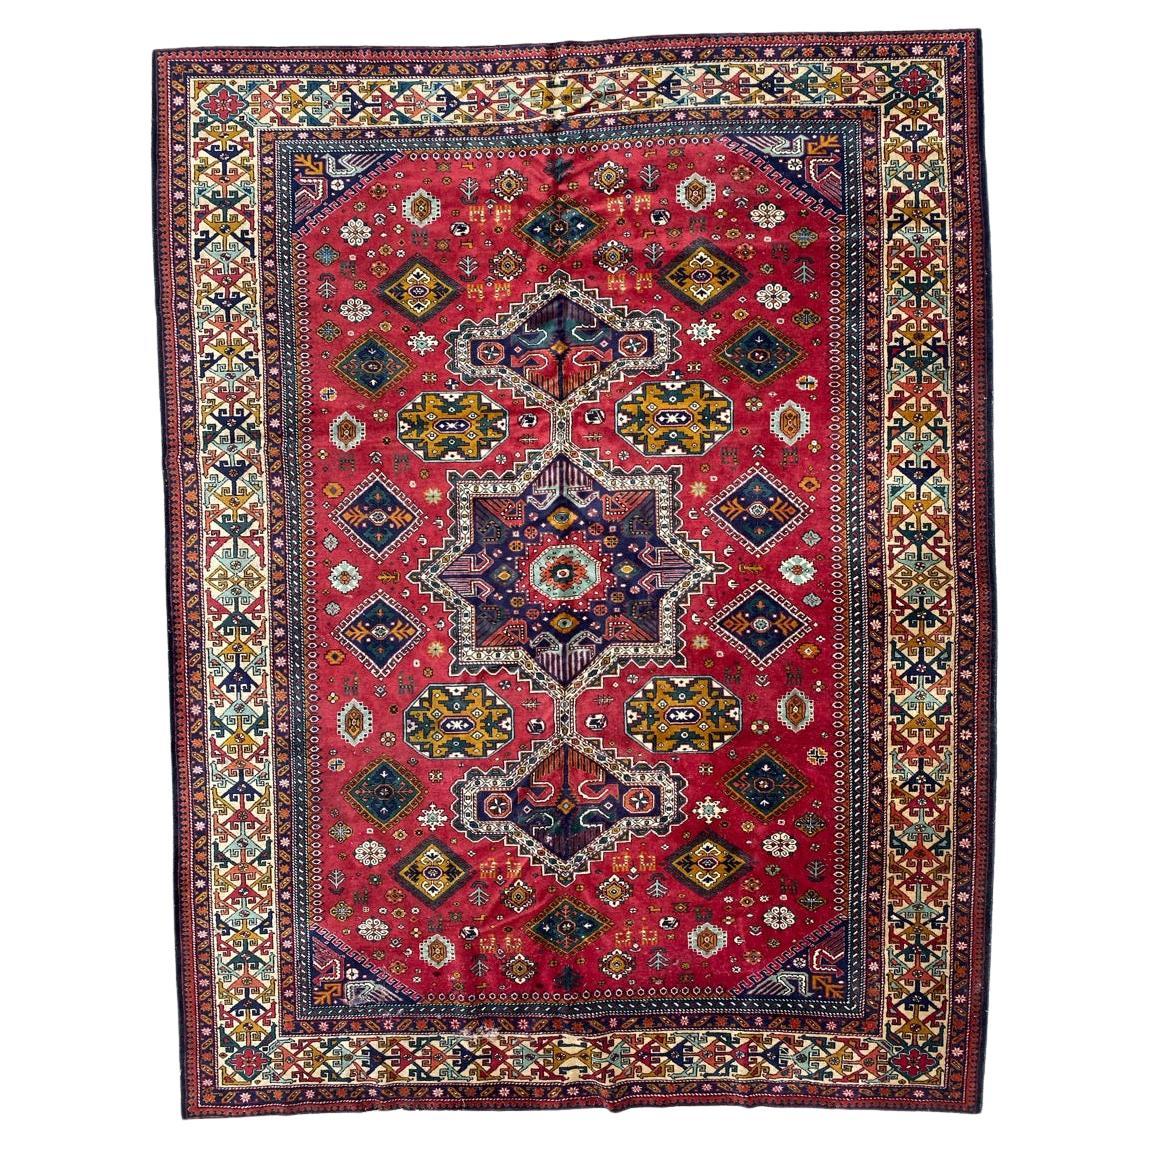 Bobyrug's Pretty Large Vintage Caucasian Azerbaïdjan Rug (Joli grand tapis caucasien vintage d'Azerbaïdjan)